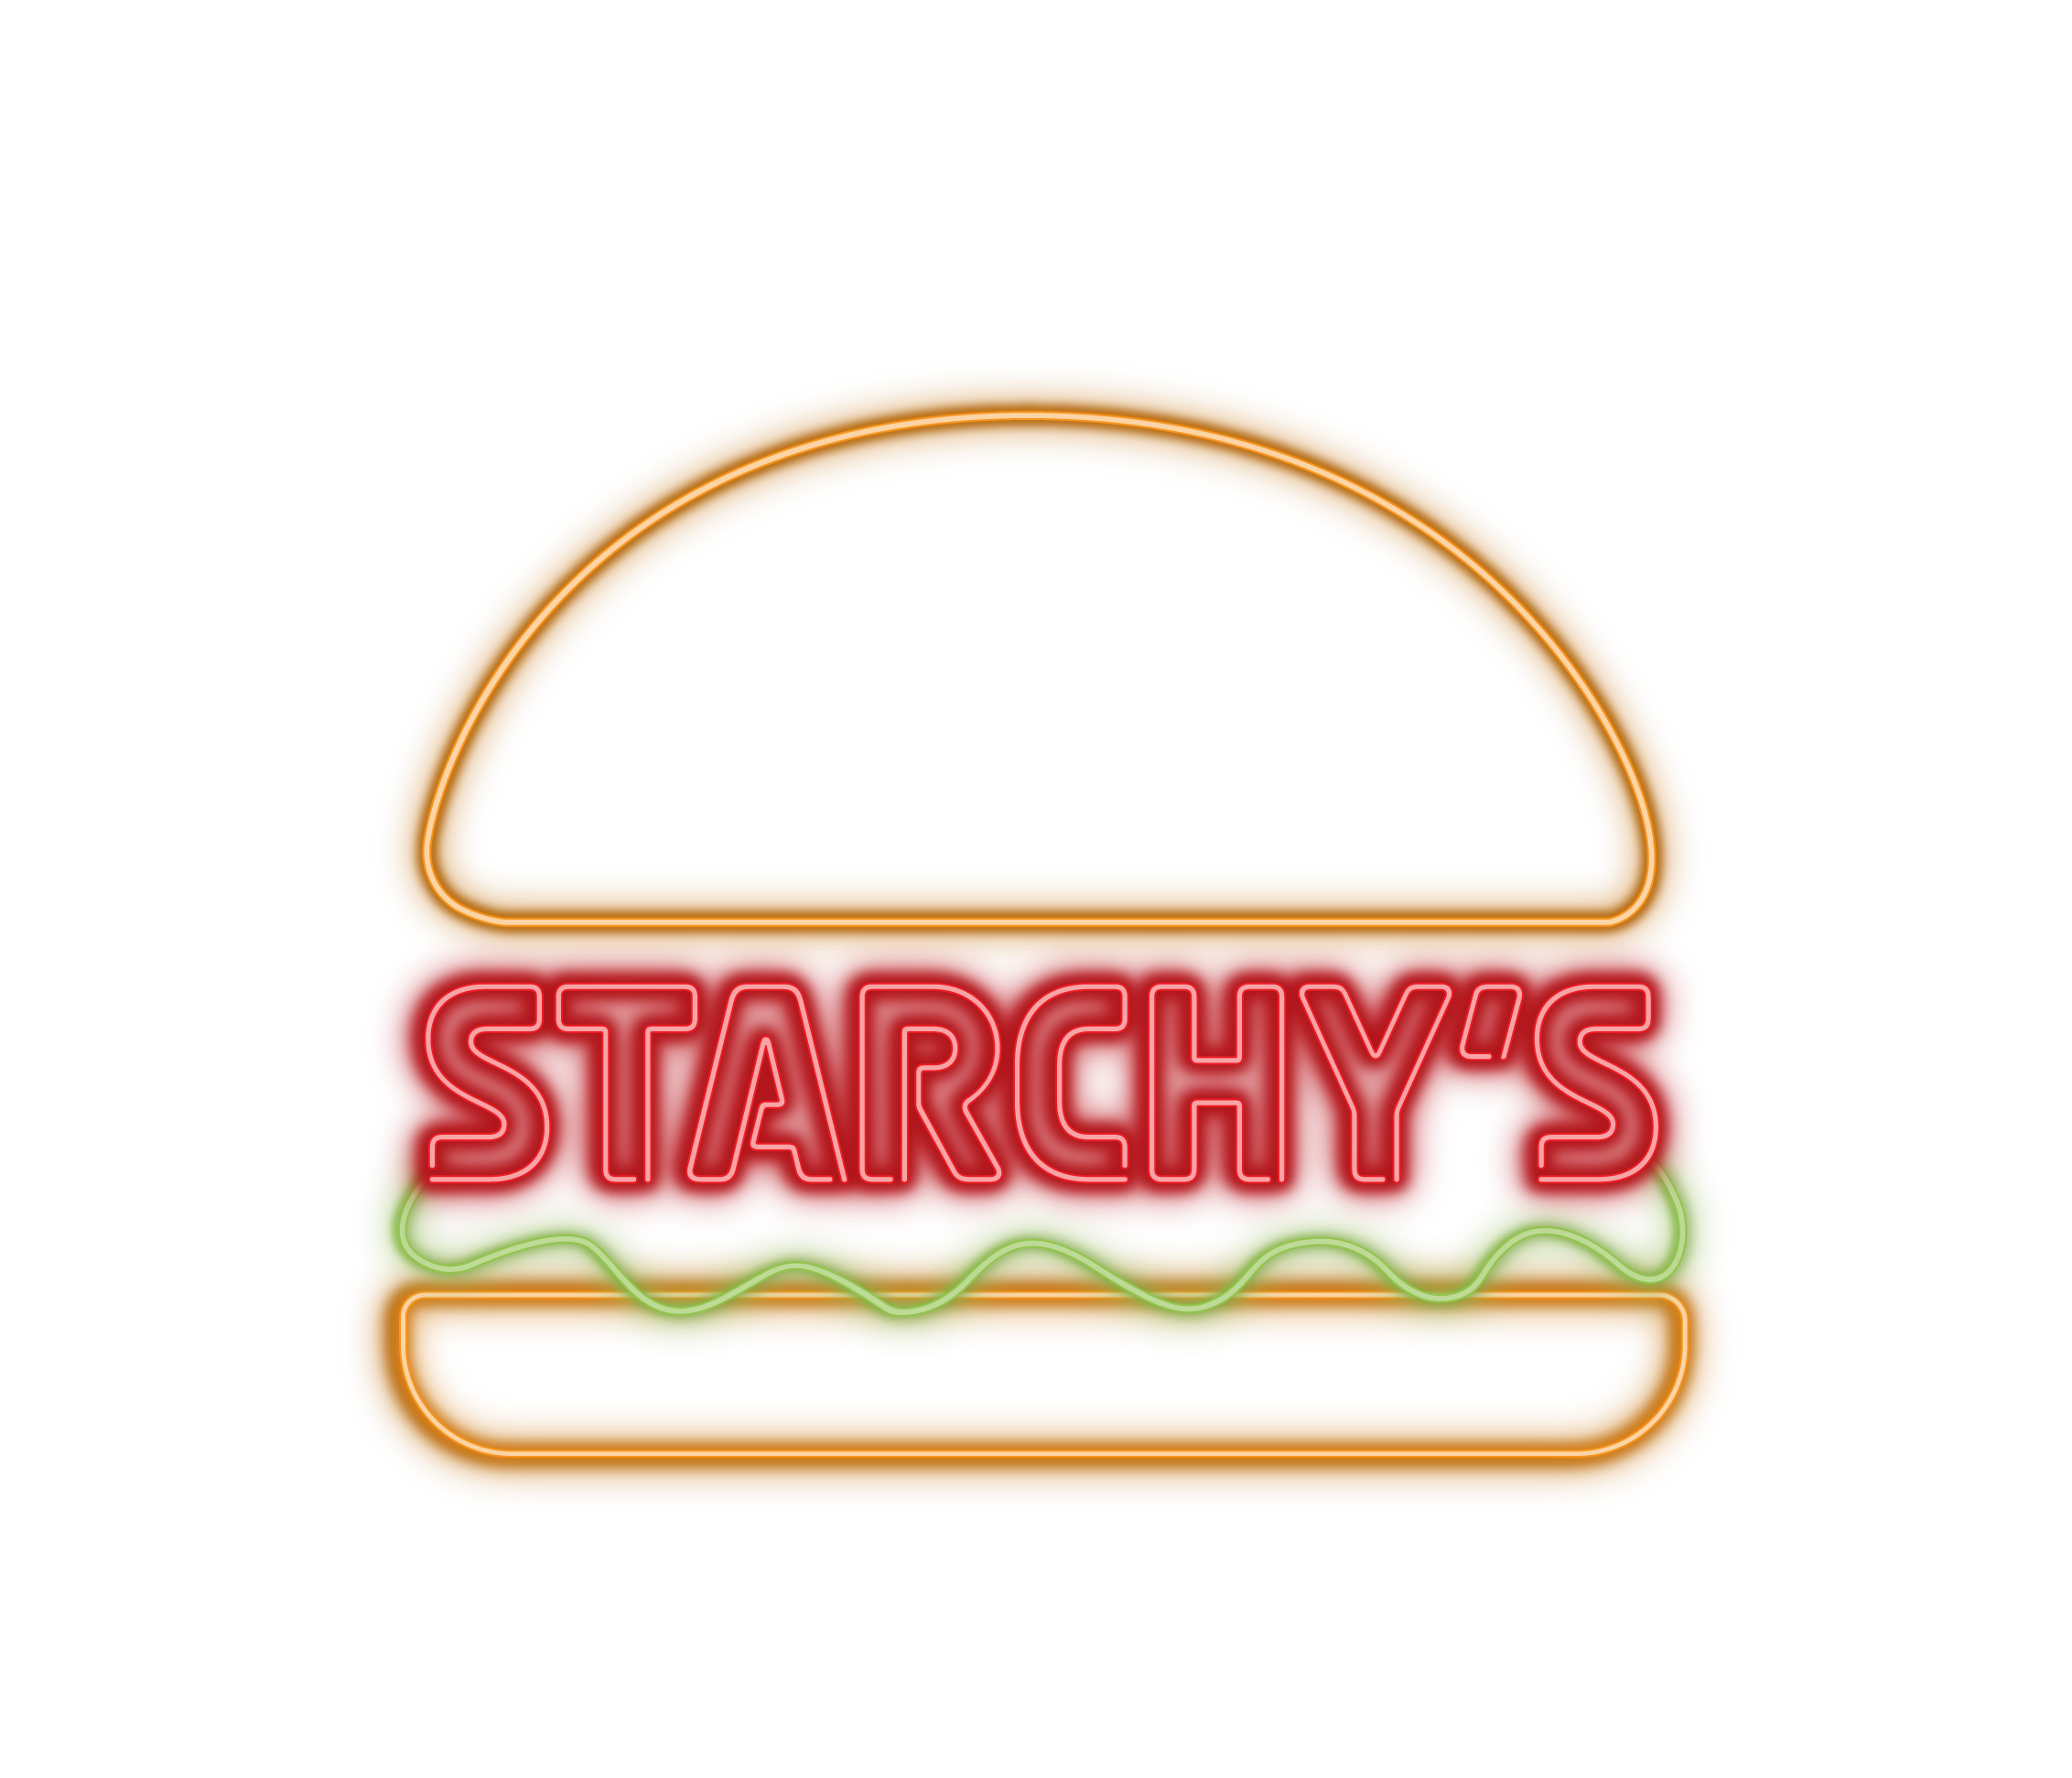 Starchy’s